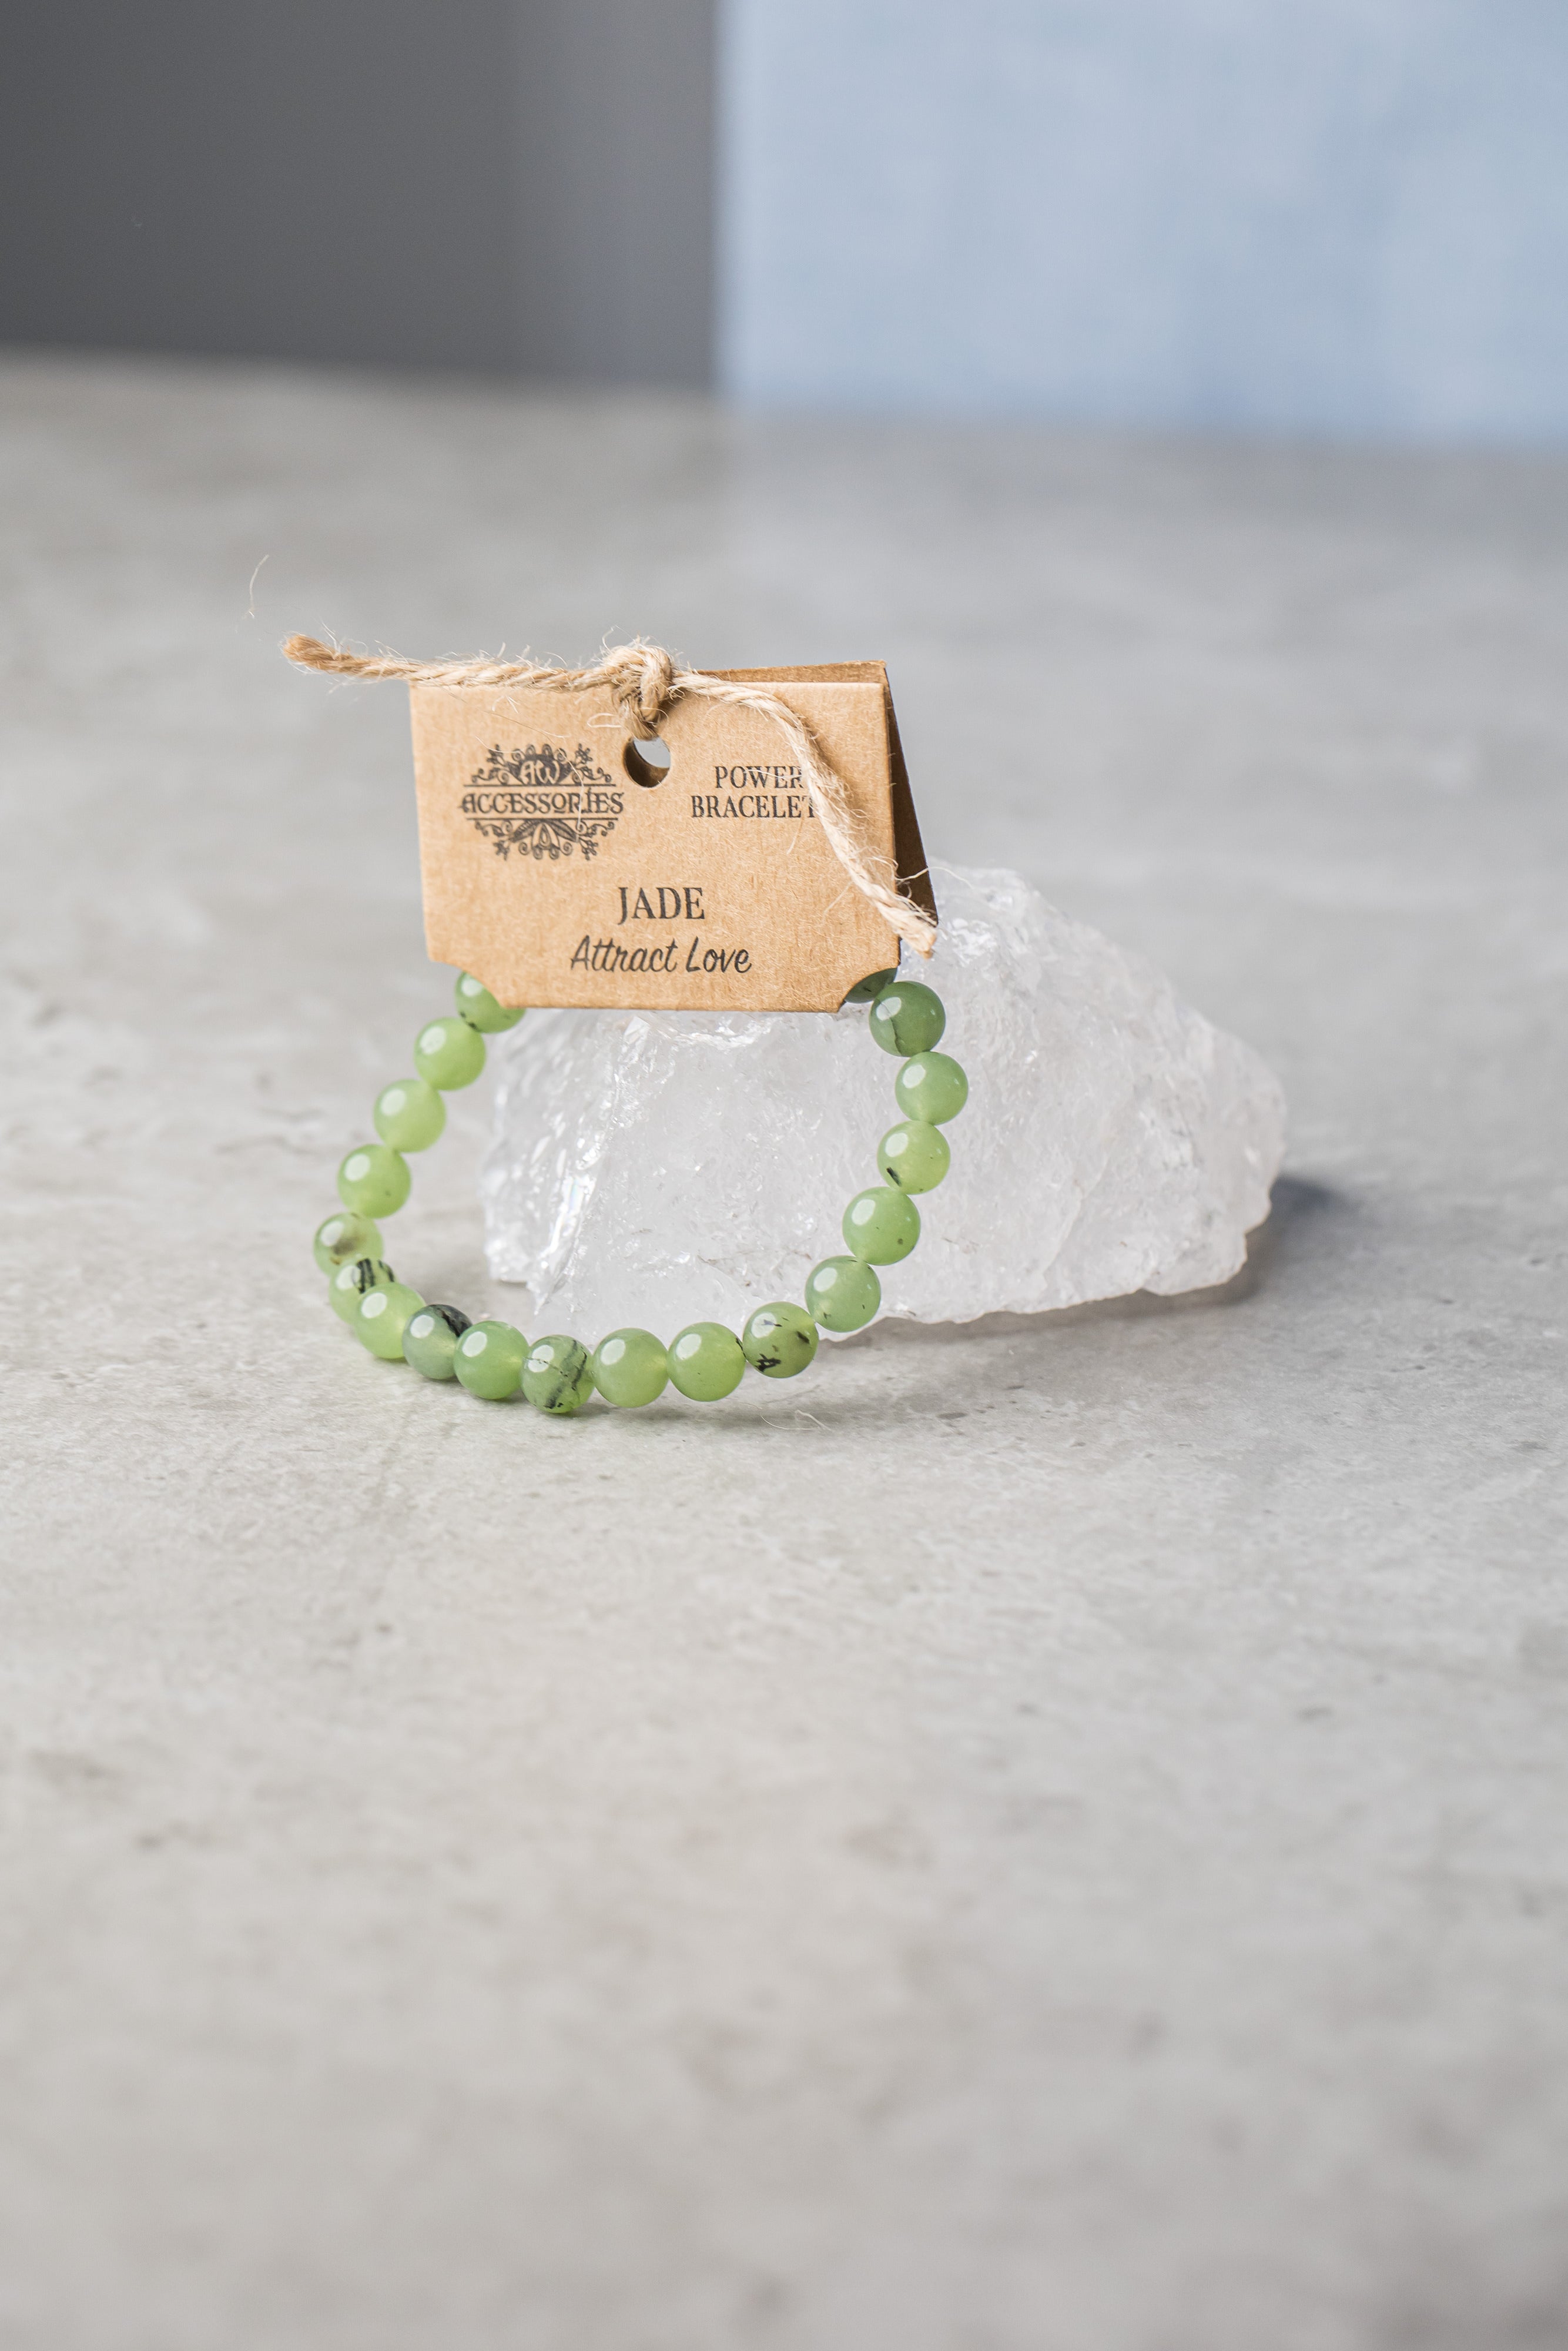 Jade Power Bracelet - Soothing Crystal for Harmony, Prosperity & Heart Chakra Balance - Everyday Rocks